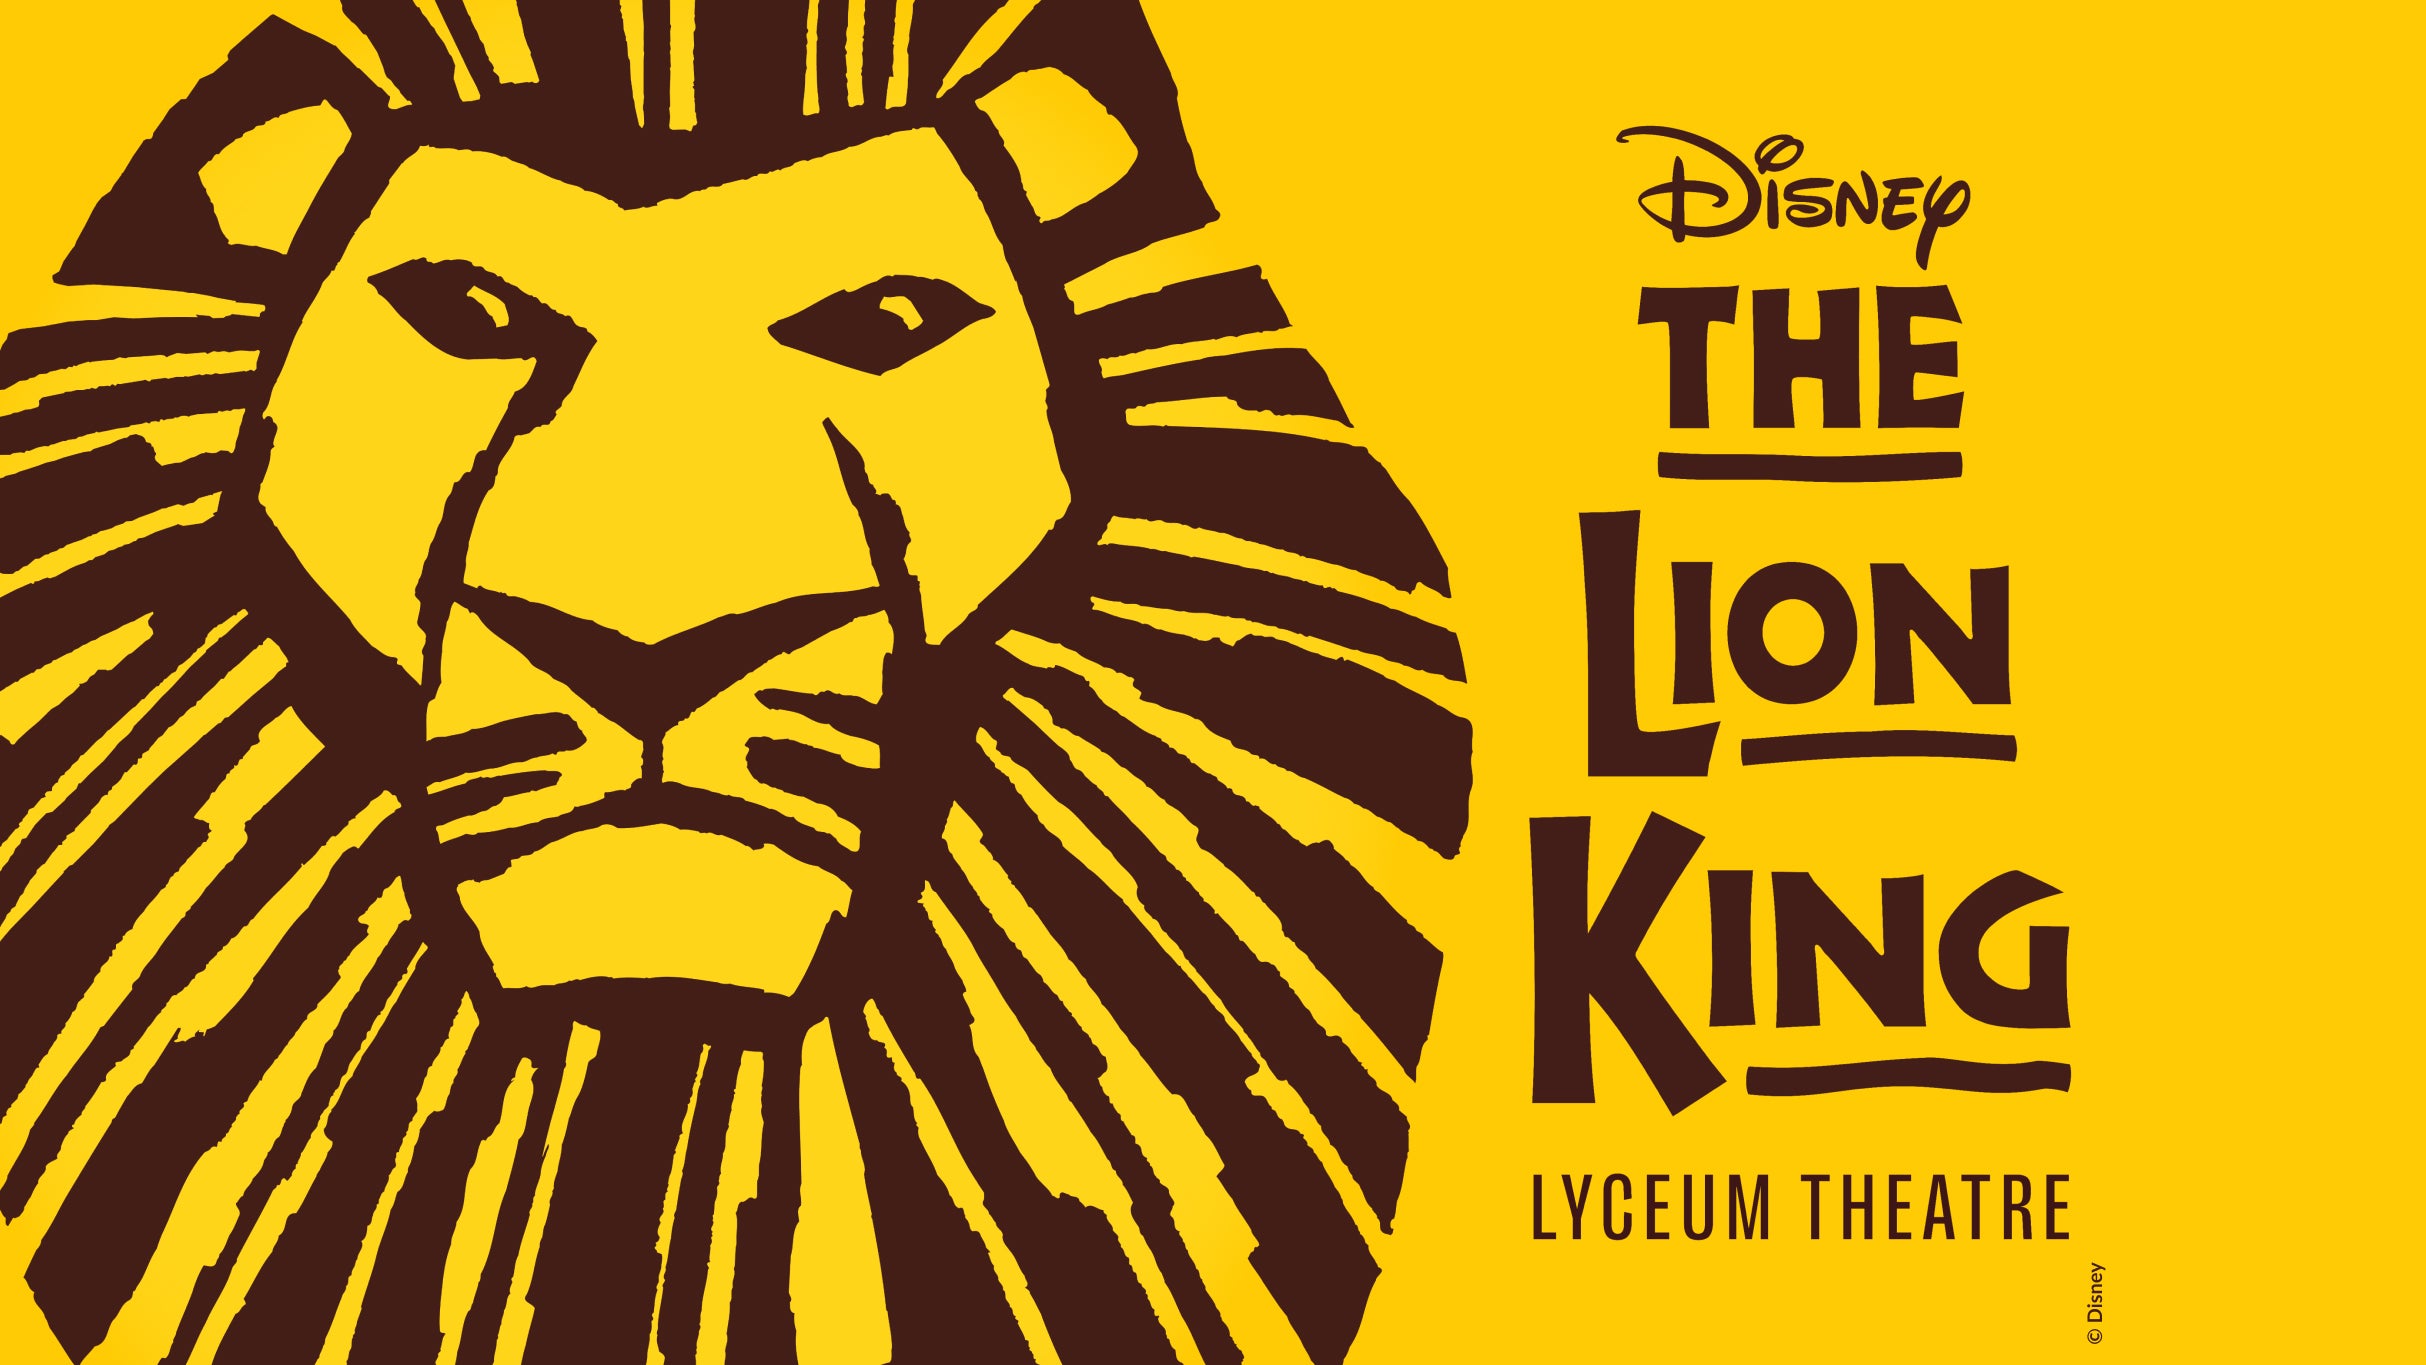 Disney's THE LION KING